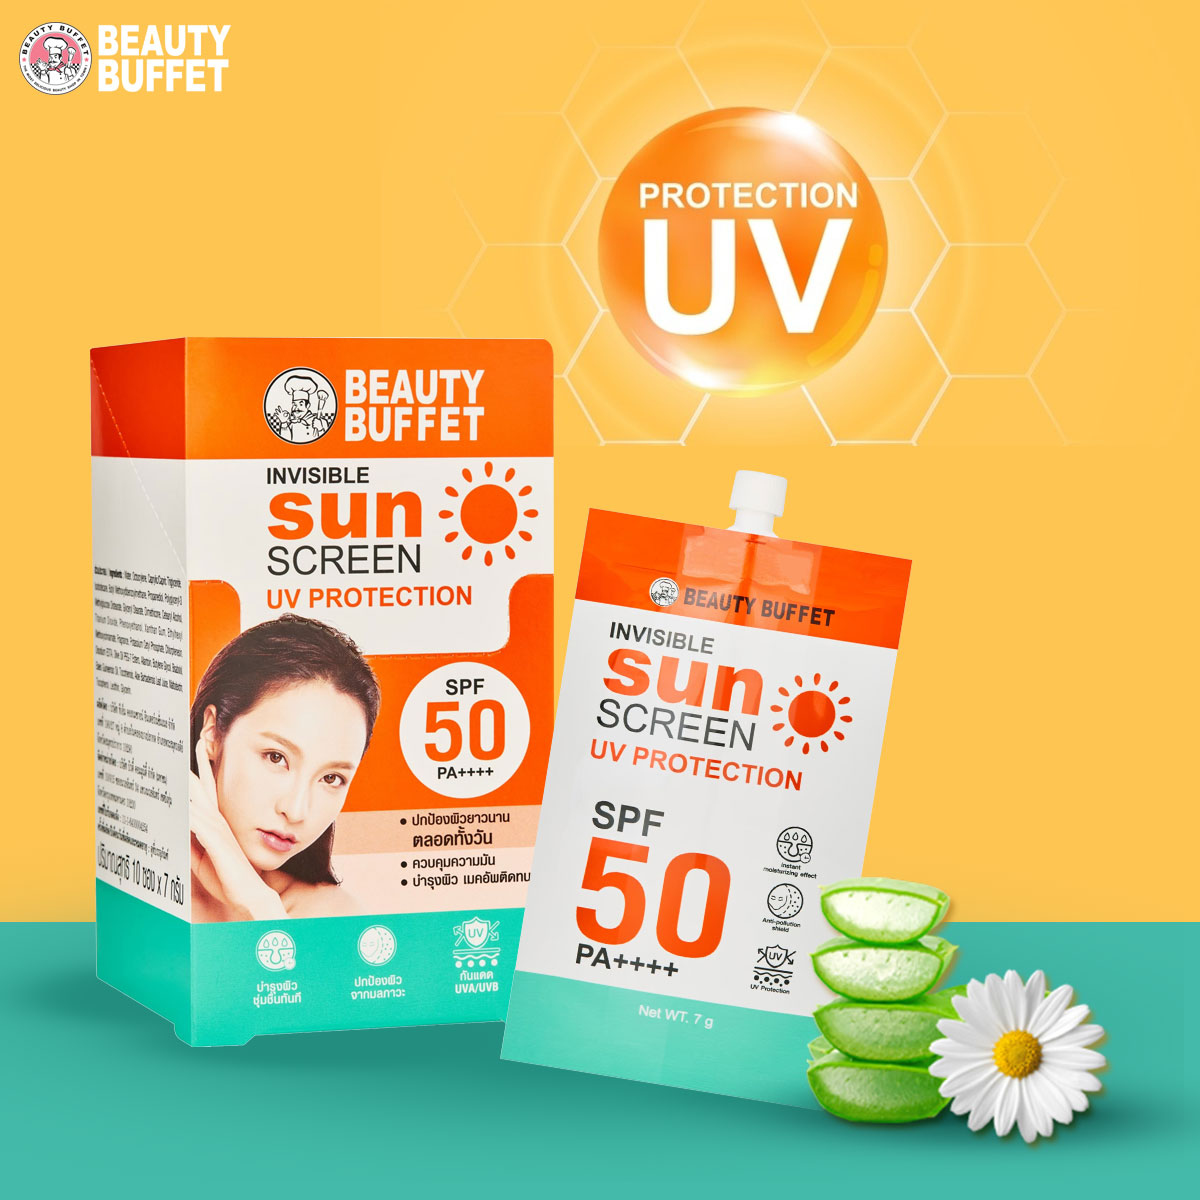 Kem chống nắng cho mặt Beauty Buffet Invisible Sunscreen UV Protection SPF 50 PA++++ 7g